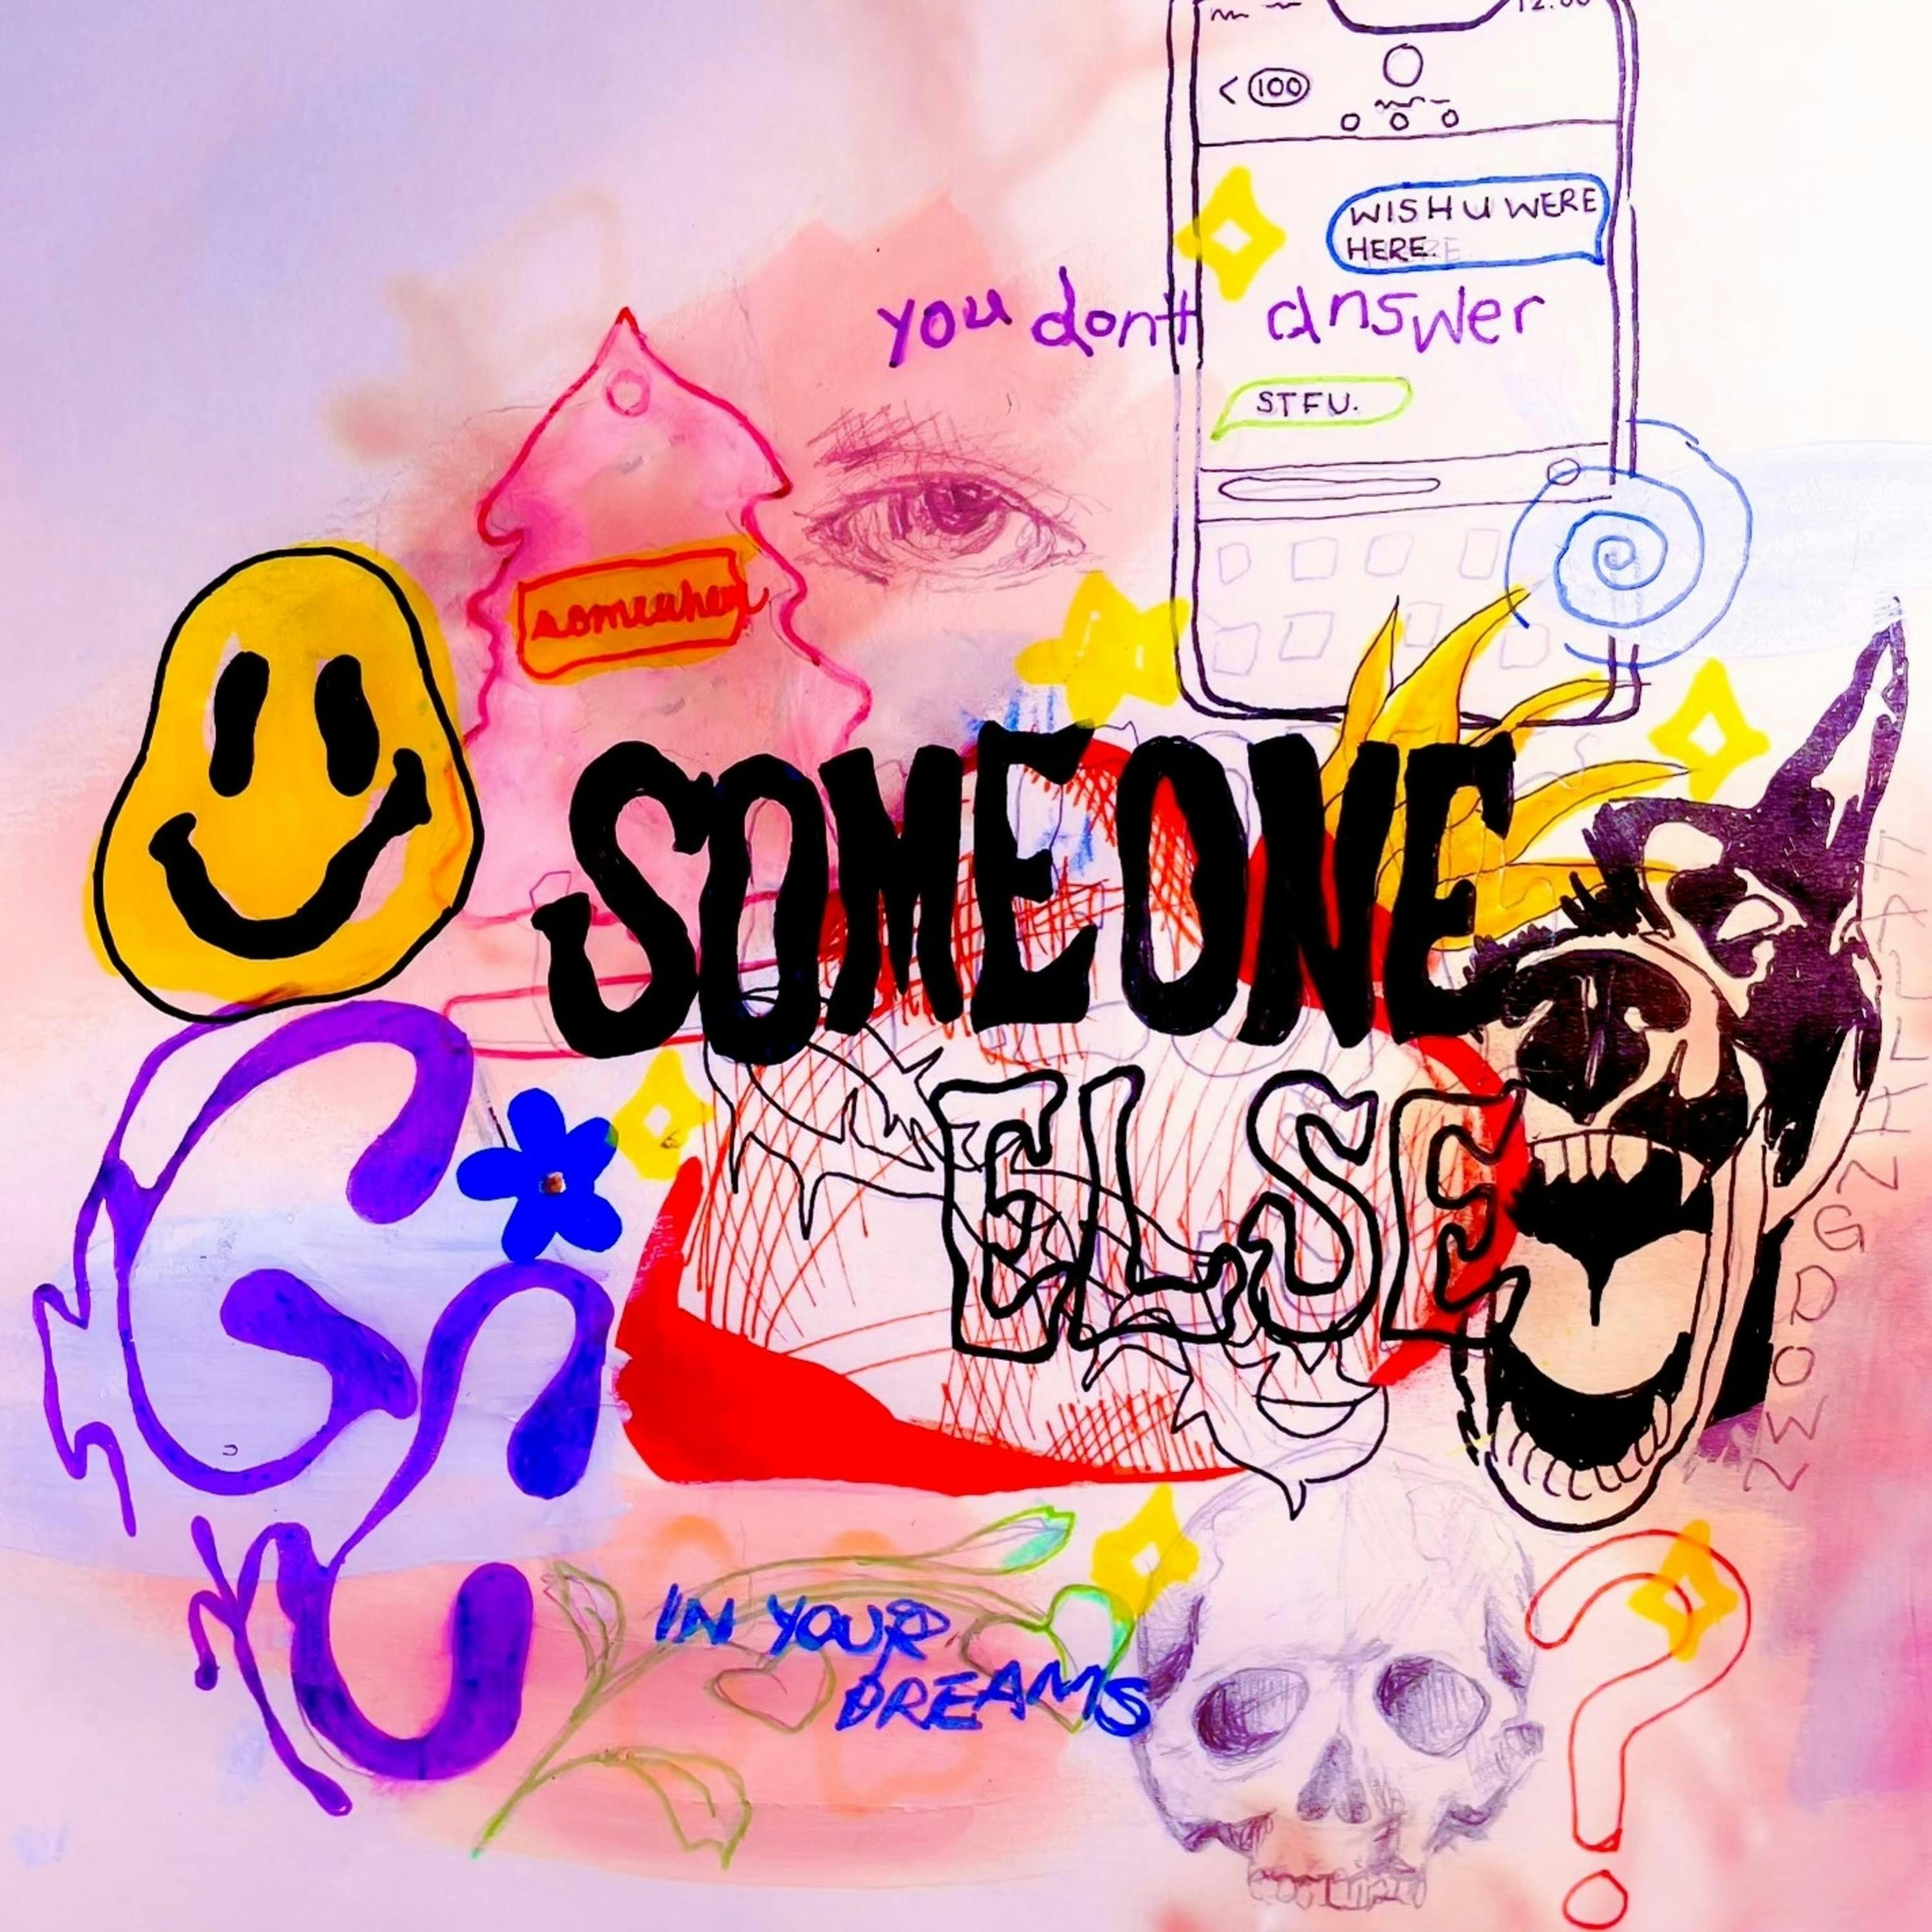 Cover art for gcmayn's song: someone else